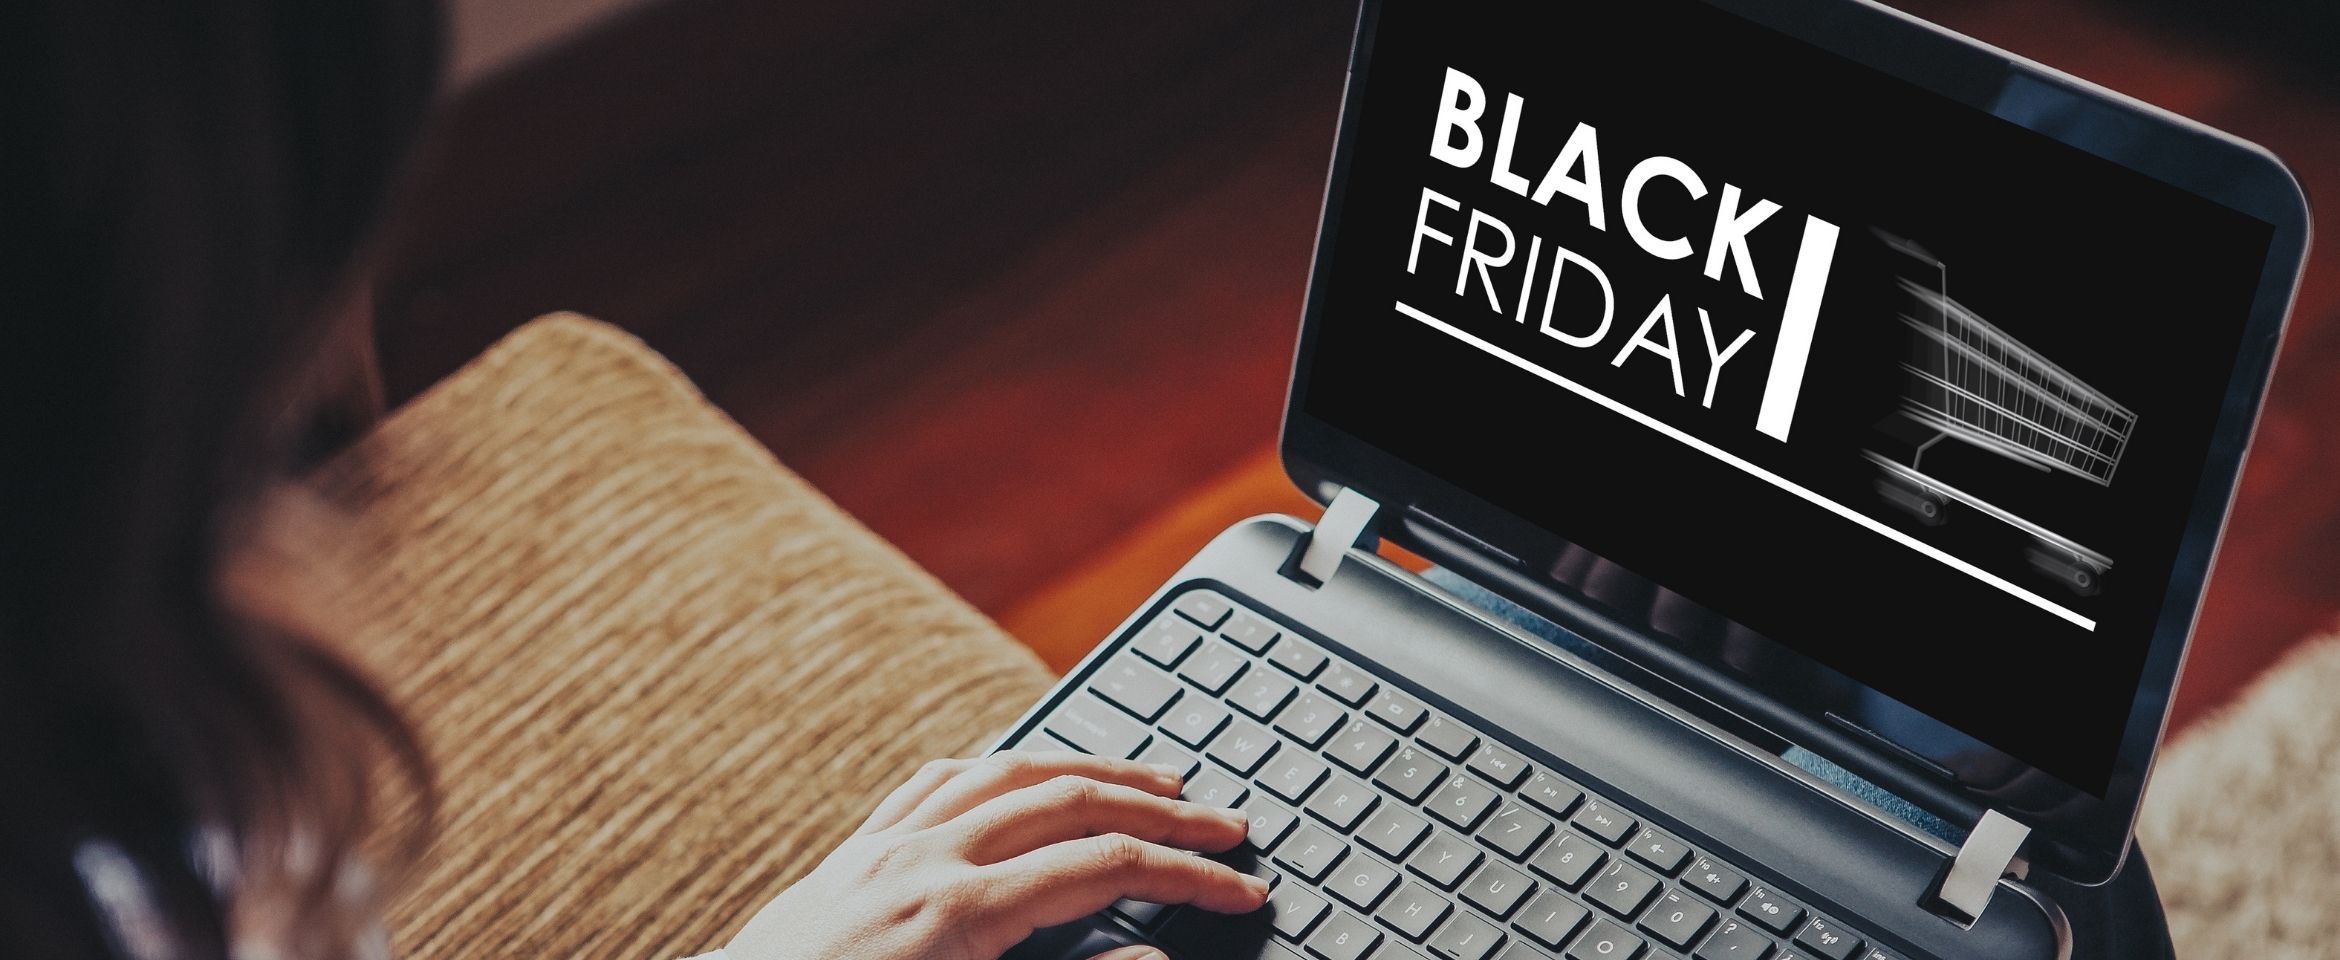 Black Friday Checklist